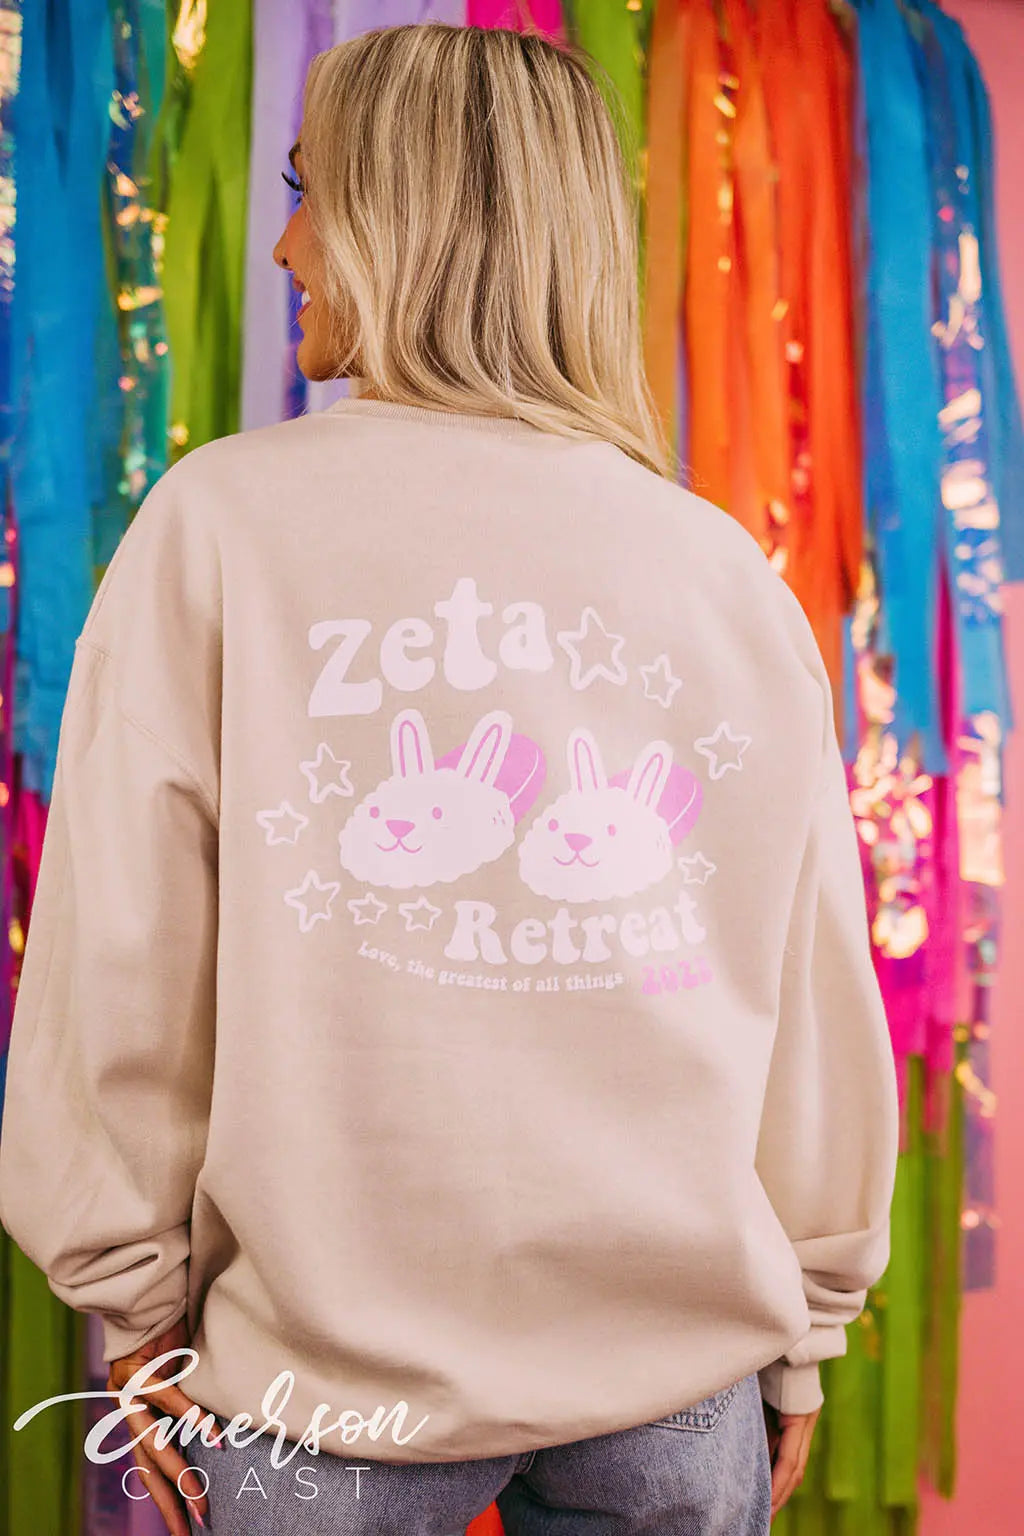 Zeta Tau Alpha Sisterhood Retreat Bunny Slippers Crewneck